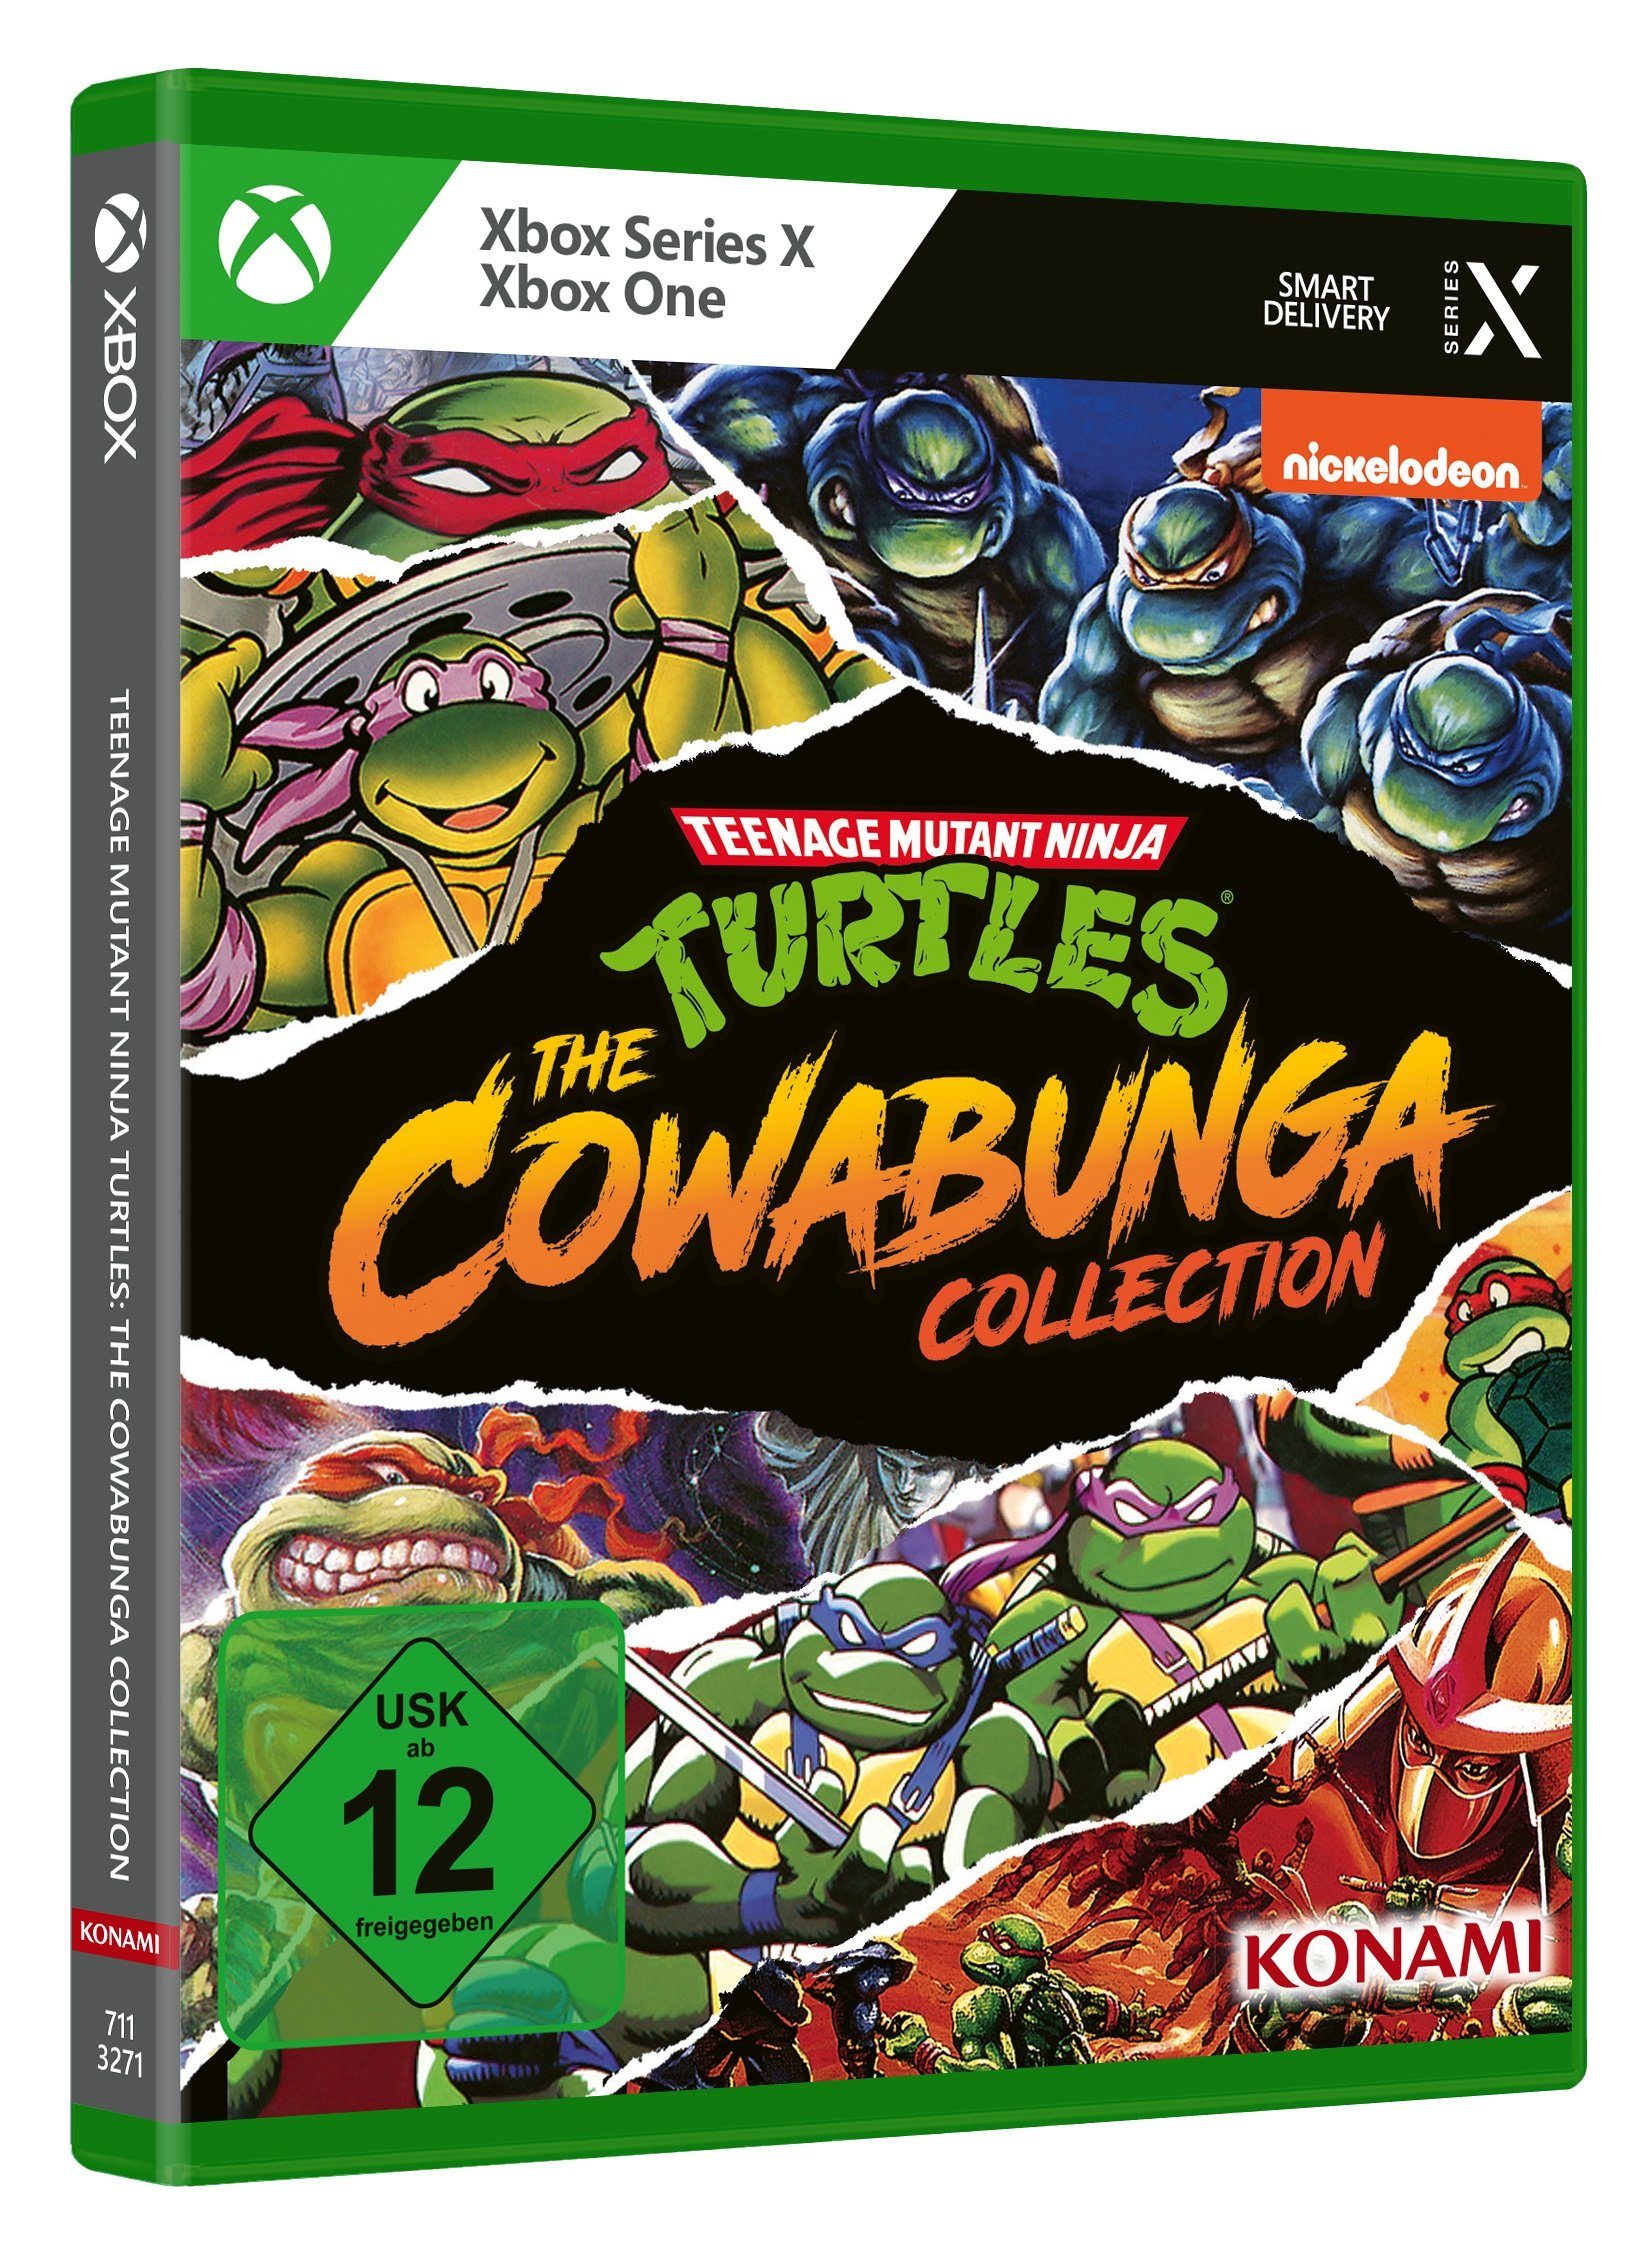 Series Cowabunga Xbox Mutant Ninja Collection - Turtles Konami Teenage Xbox One, The X